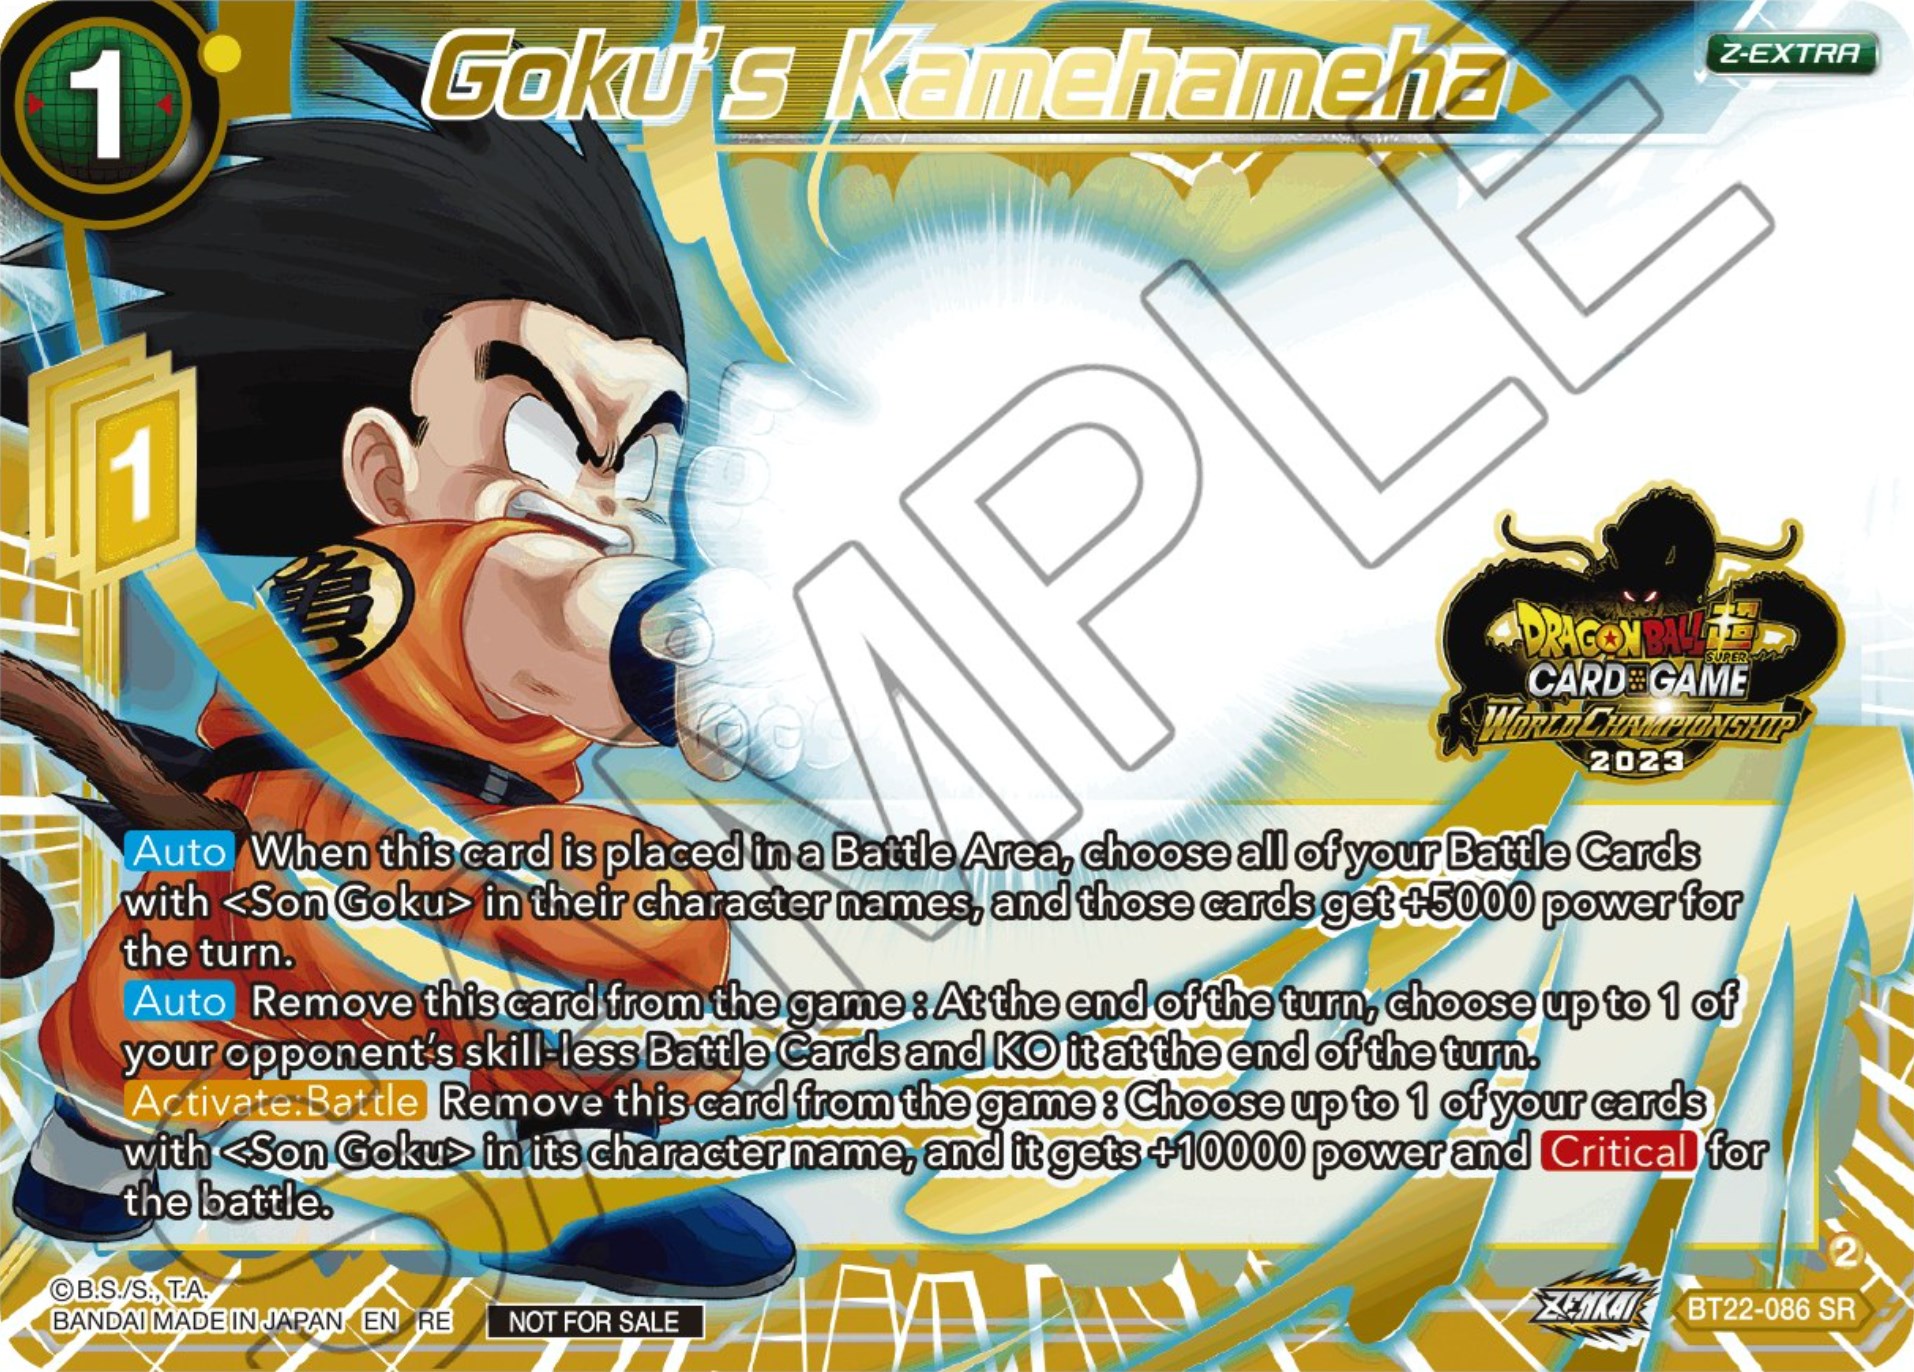 Goku's Kamehameha (2023 World Championship Z-Extra Card Set 